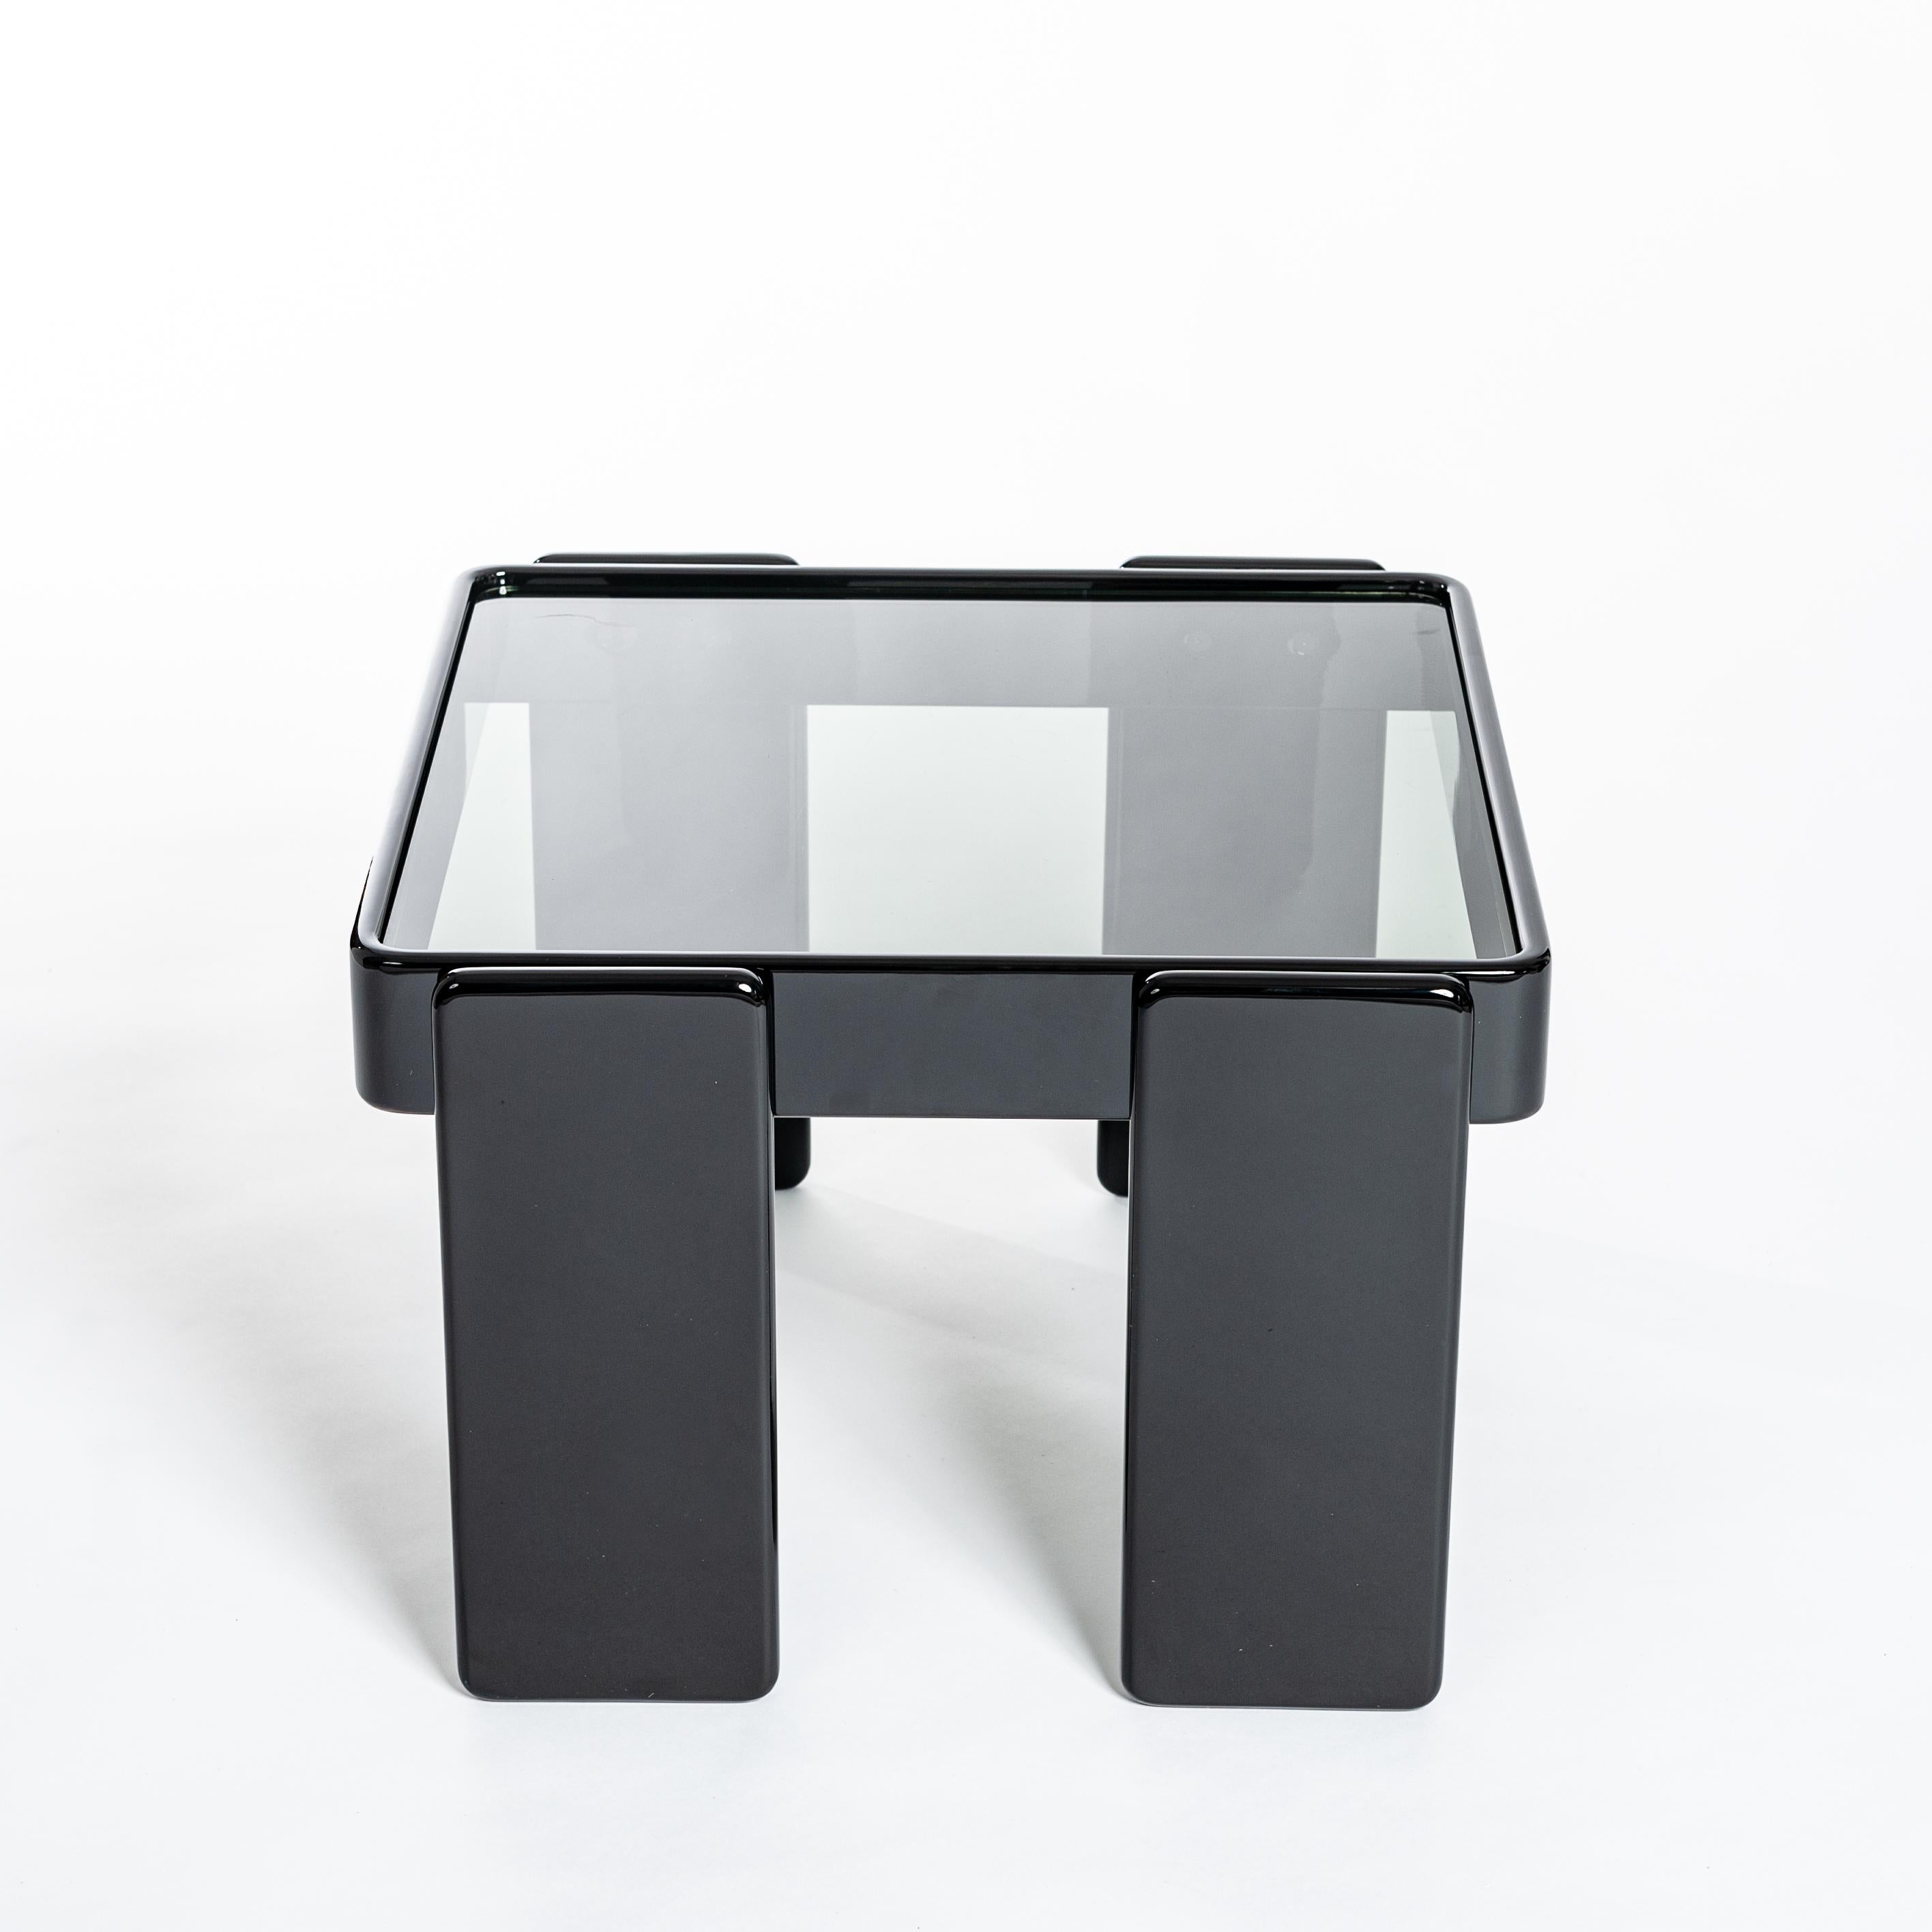 Mid-20th Century Italian Midcentury Gianfranco Frattini Black Nesting Tables for Cassina, 1960s For Sale